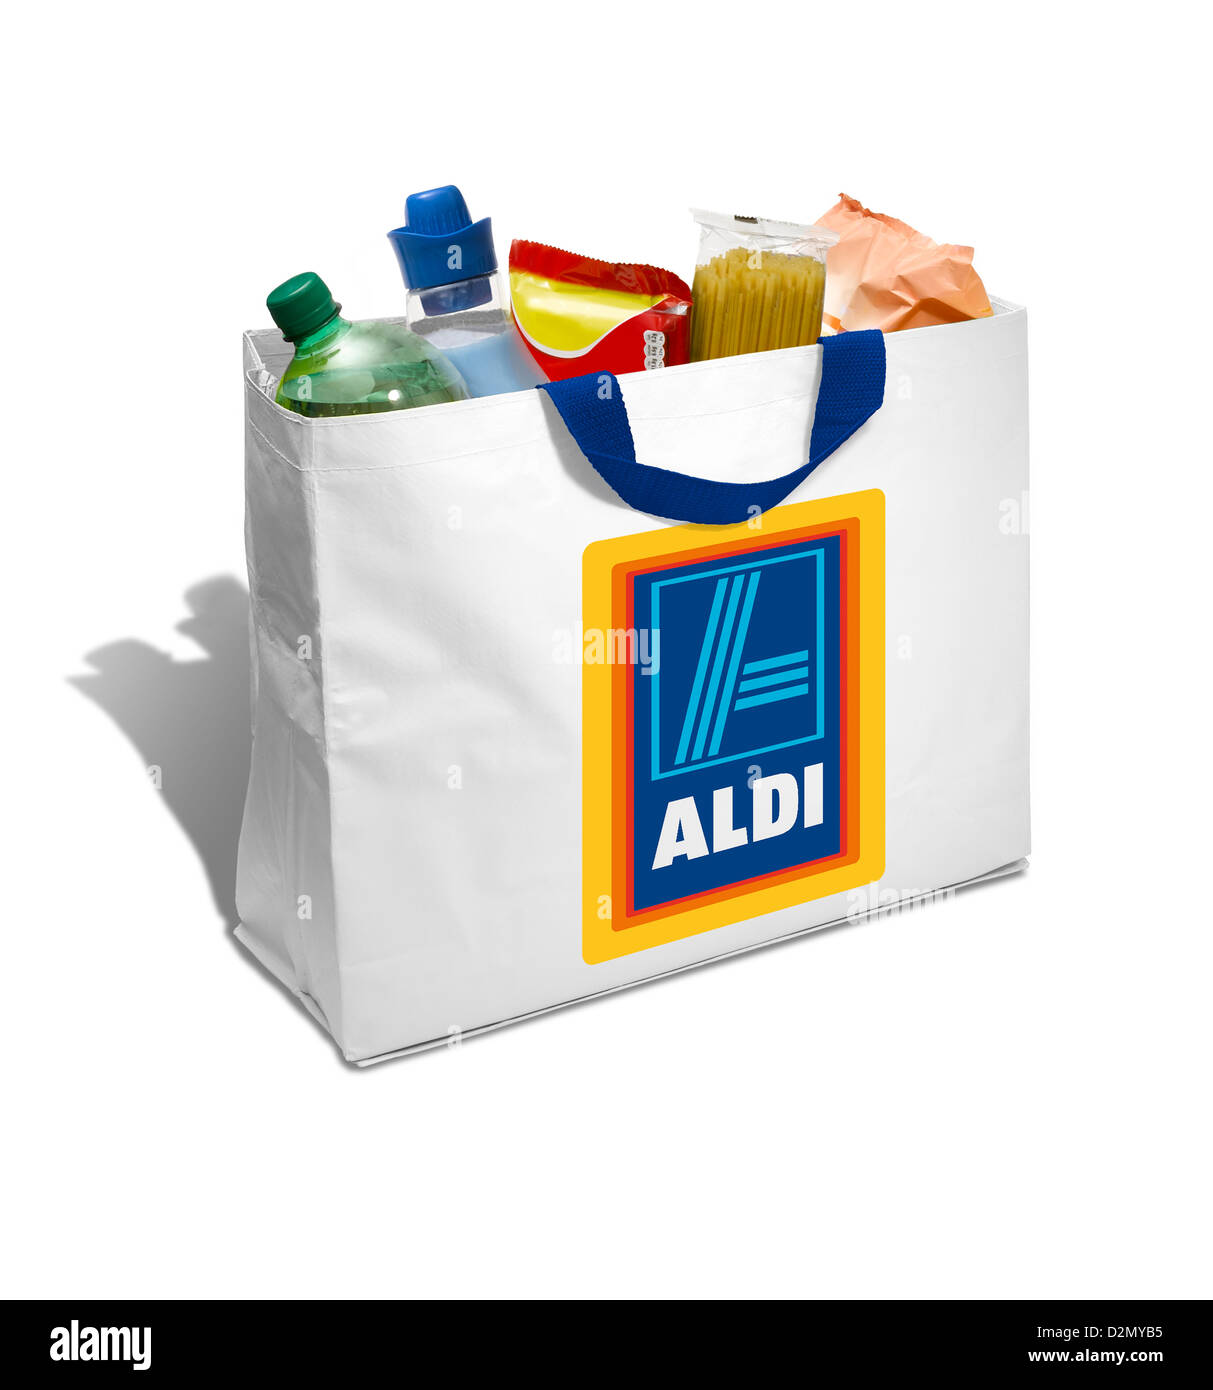 Aldi bag -Fotos und -Bildmaterial in hoher Auflösung – Alamy